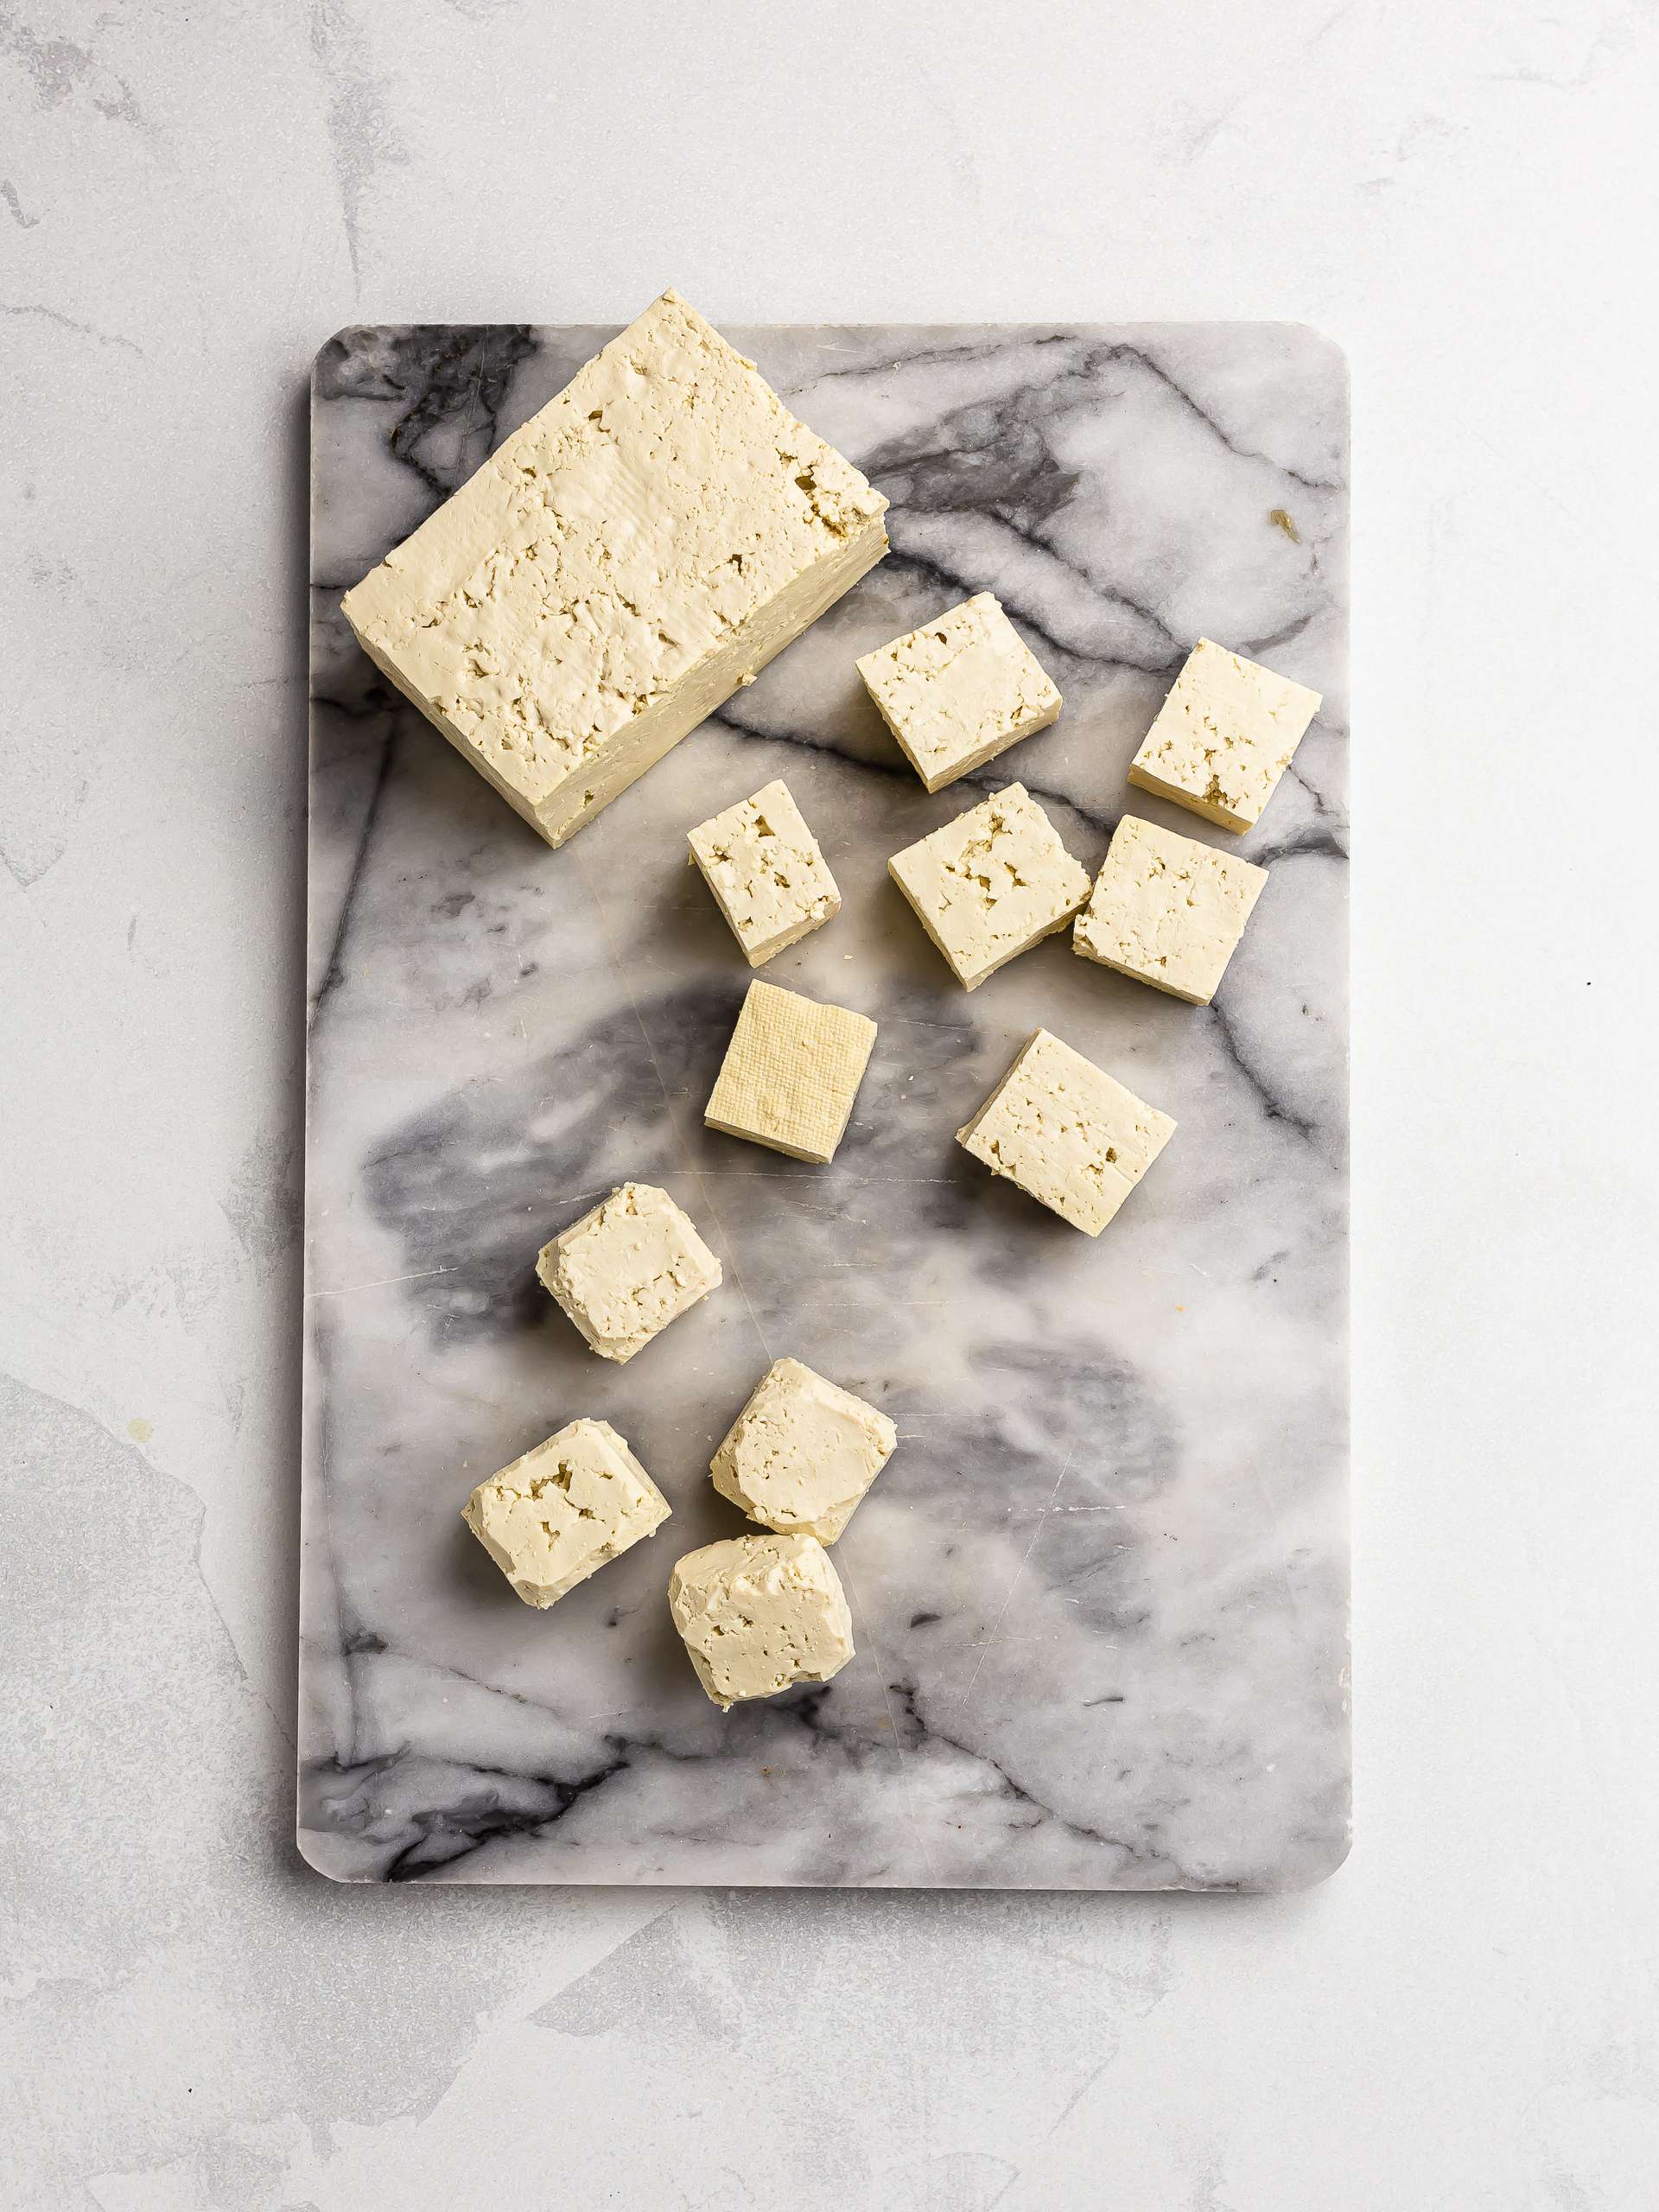 diced tofu on a chopping board